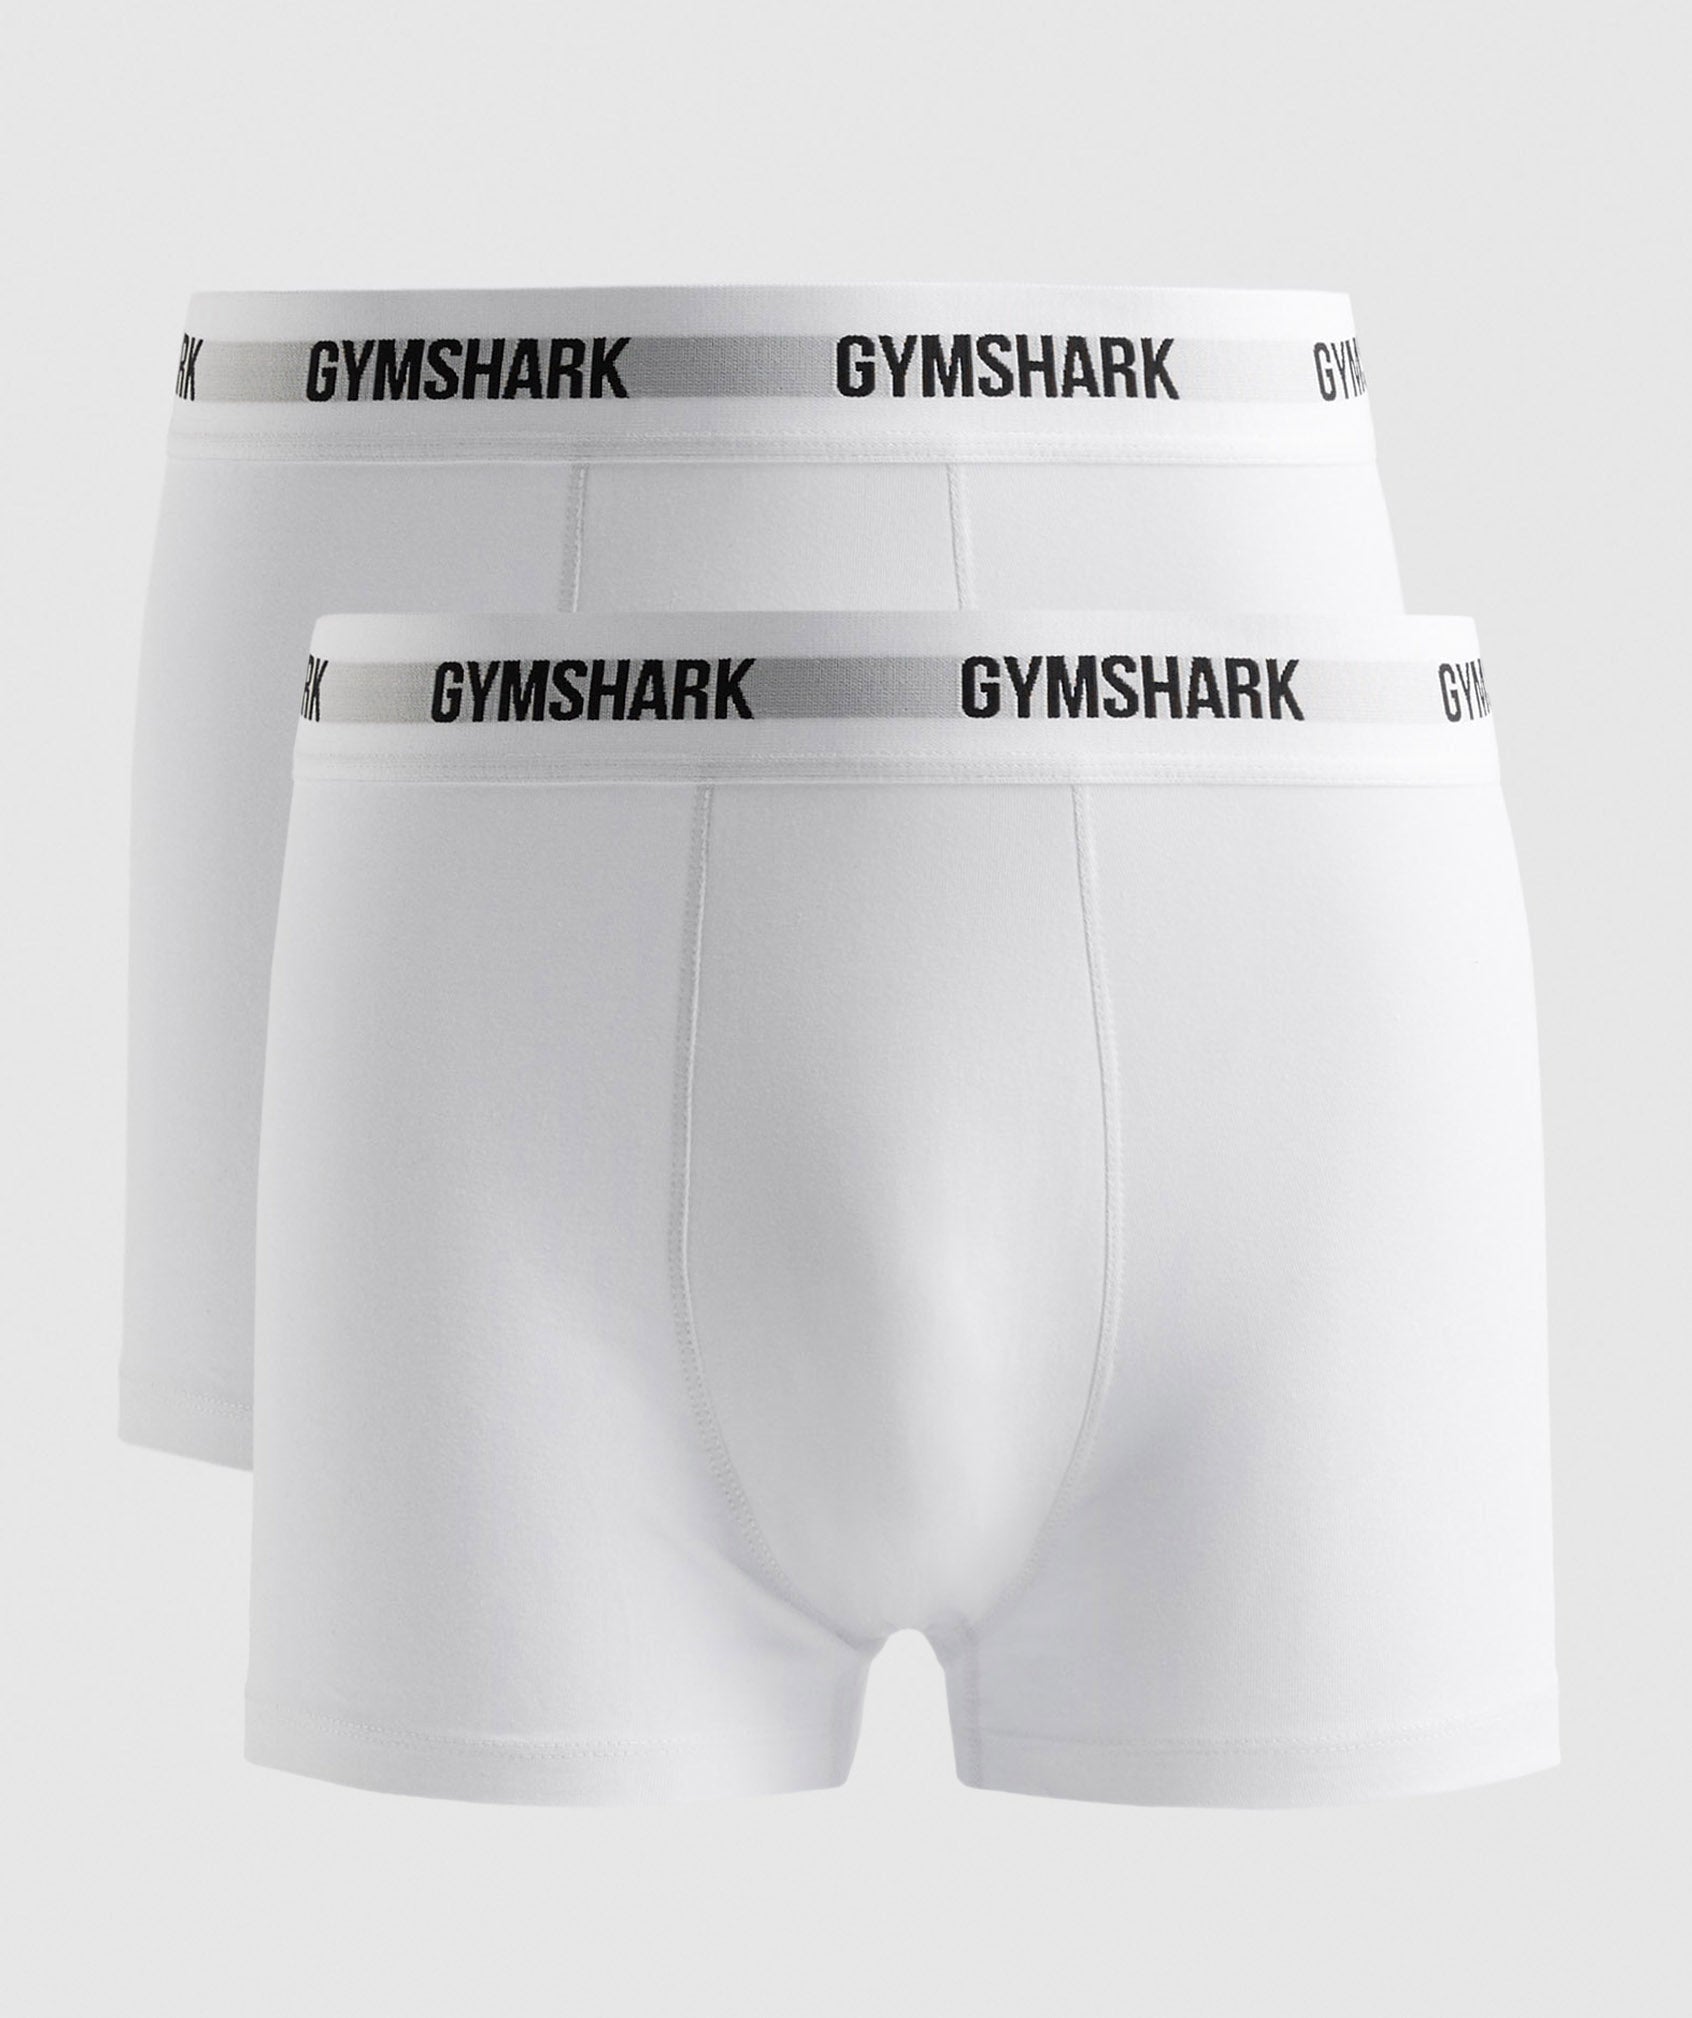 Gymshark Stitch Feature Woven Pants - Black